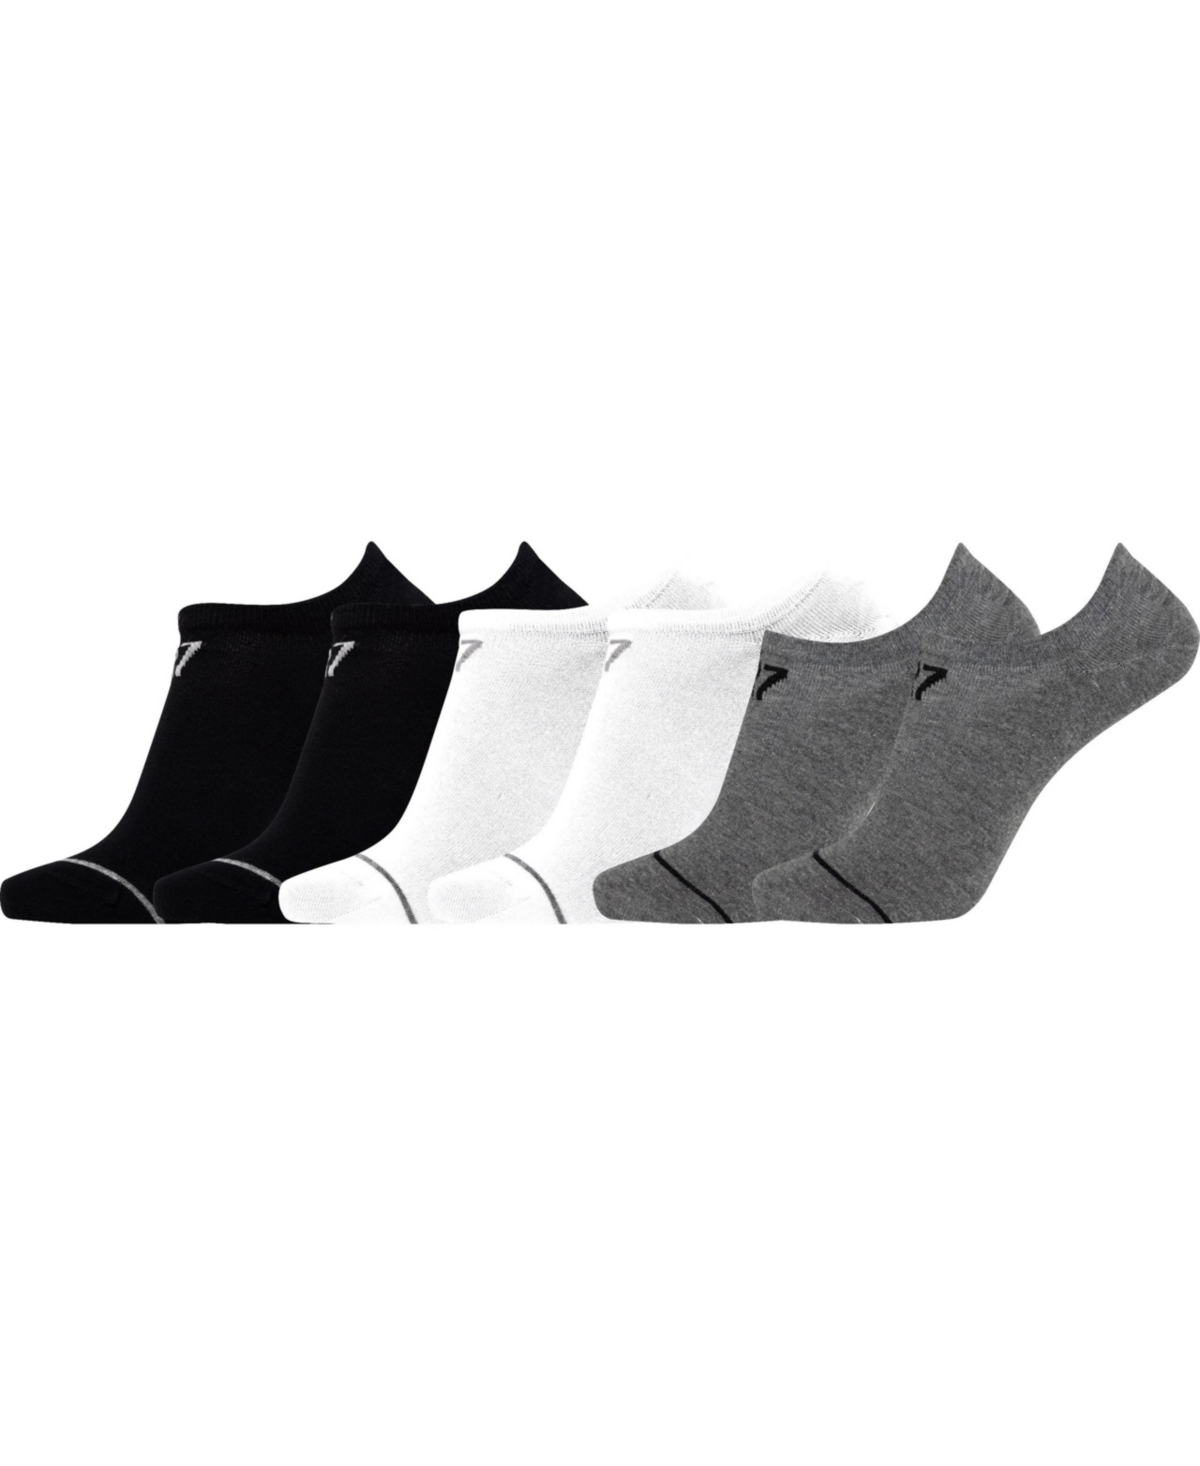 Men's Athletic Footie Socks, Pack of 6 - Black, White, Gray